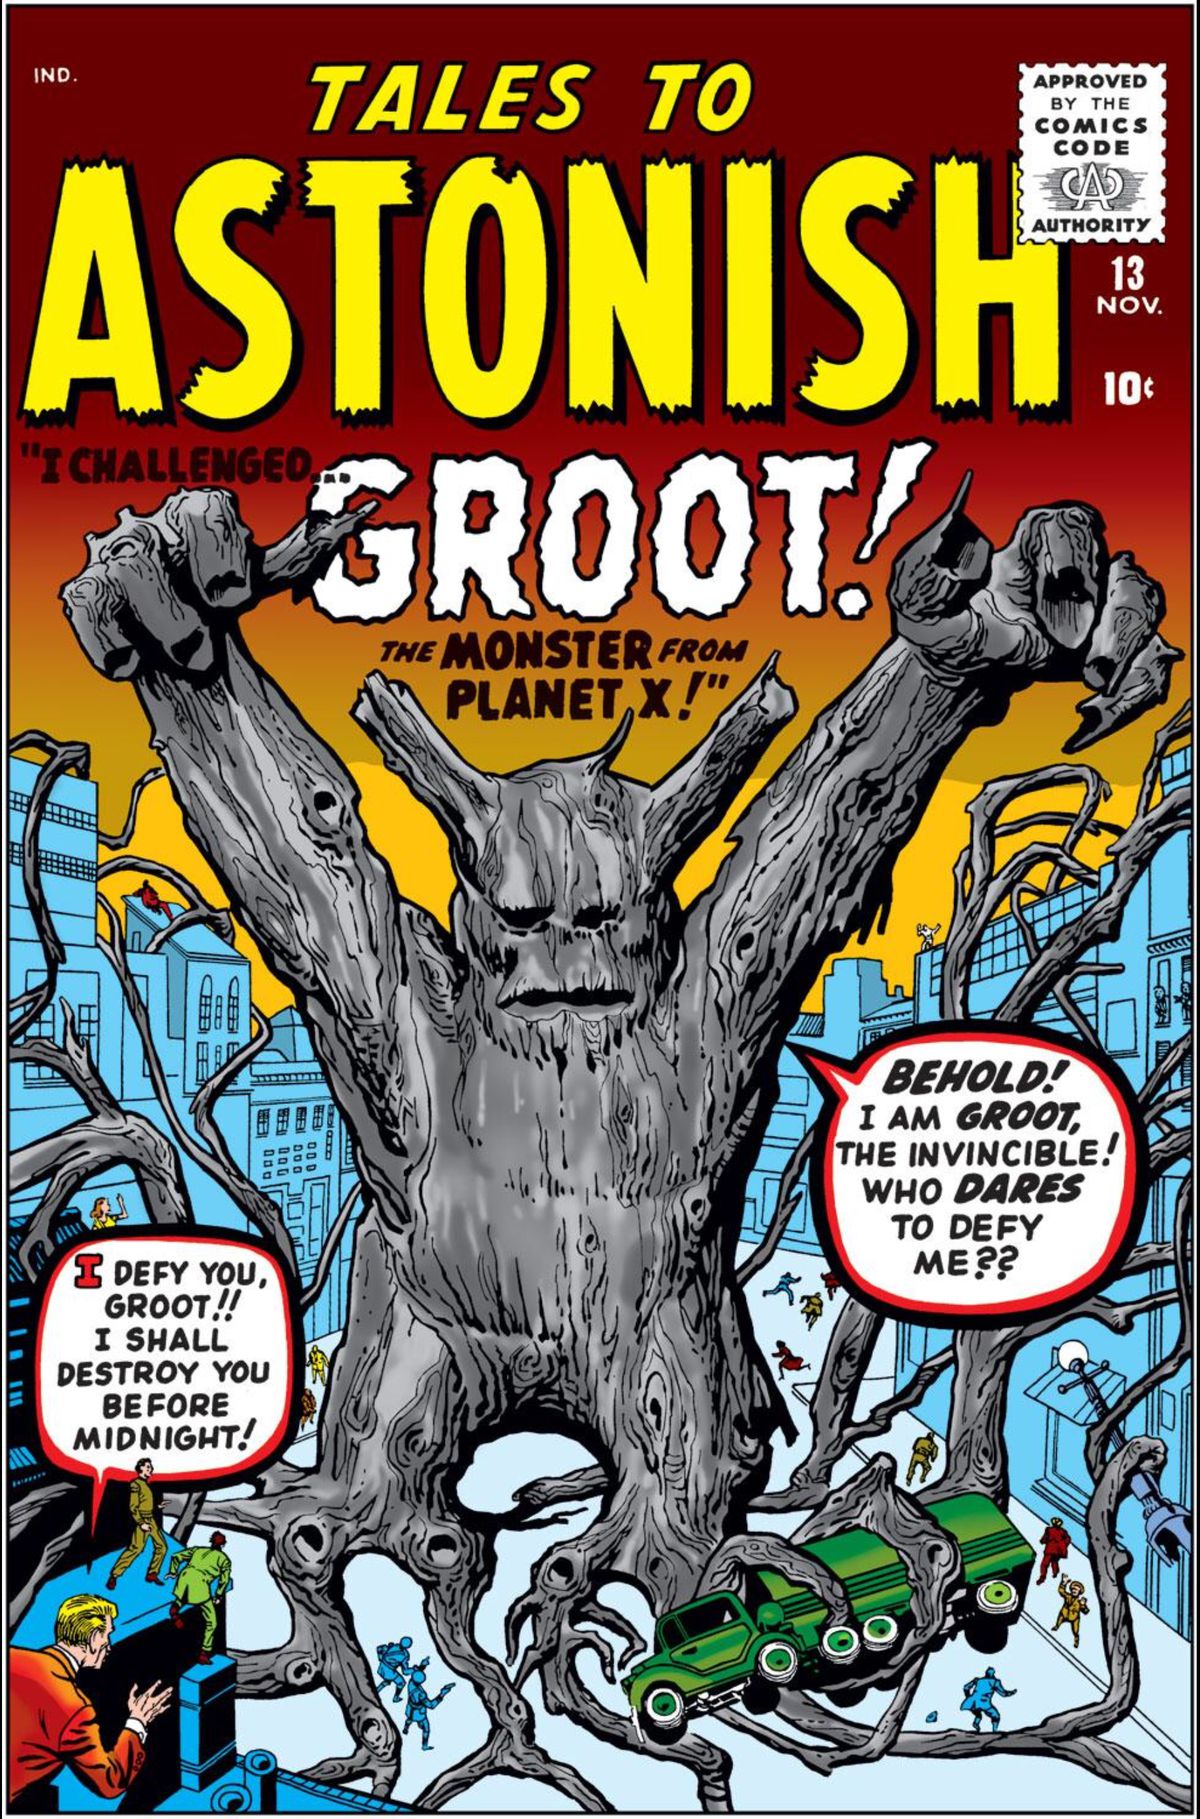 Tales to Astonish #13, Marvel Comics (1960).